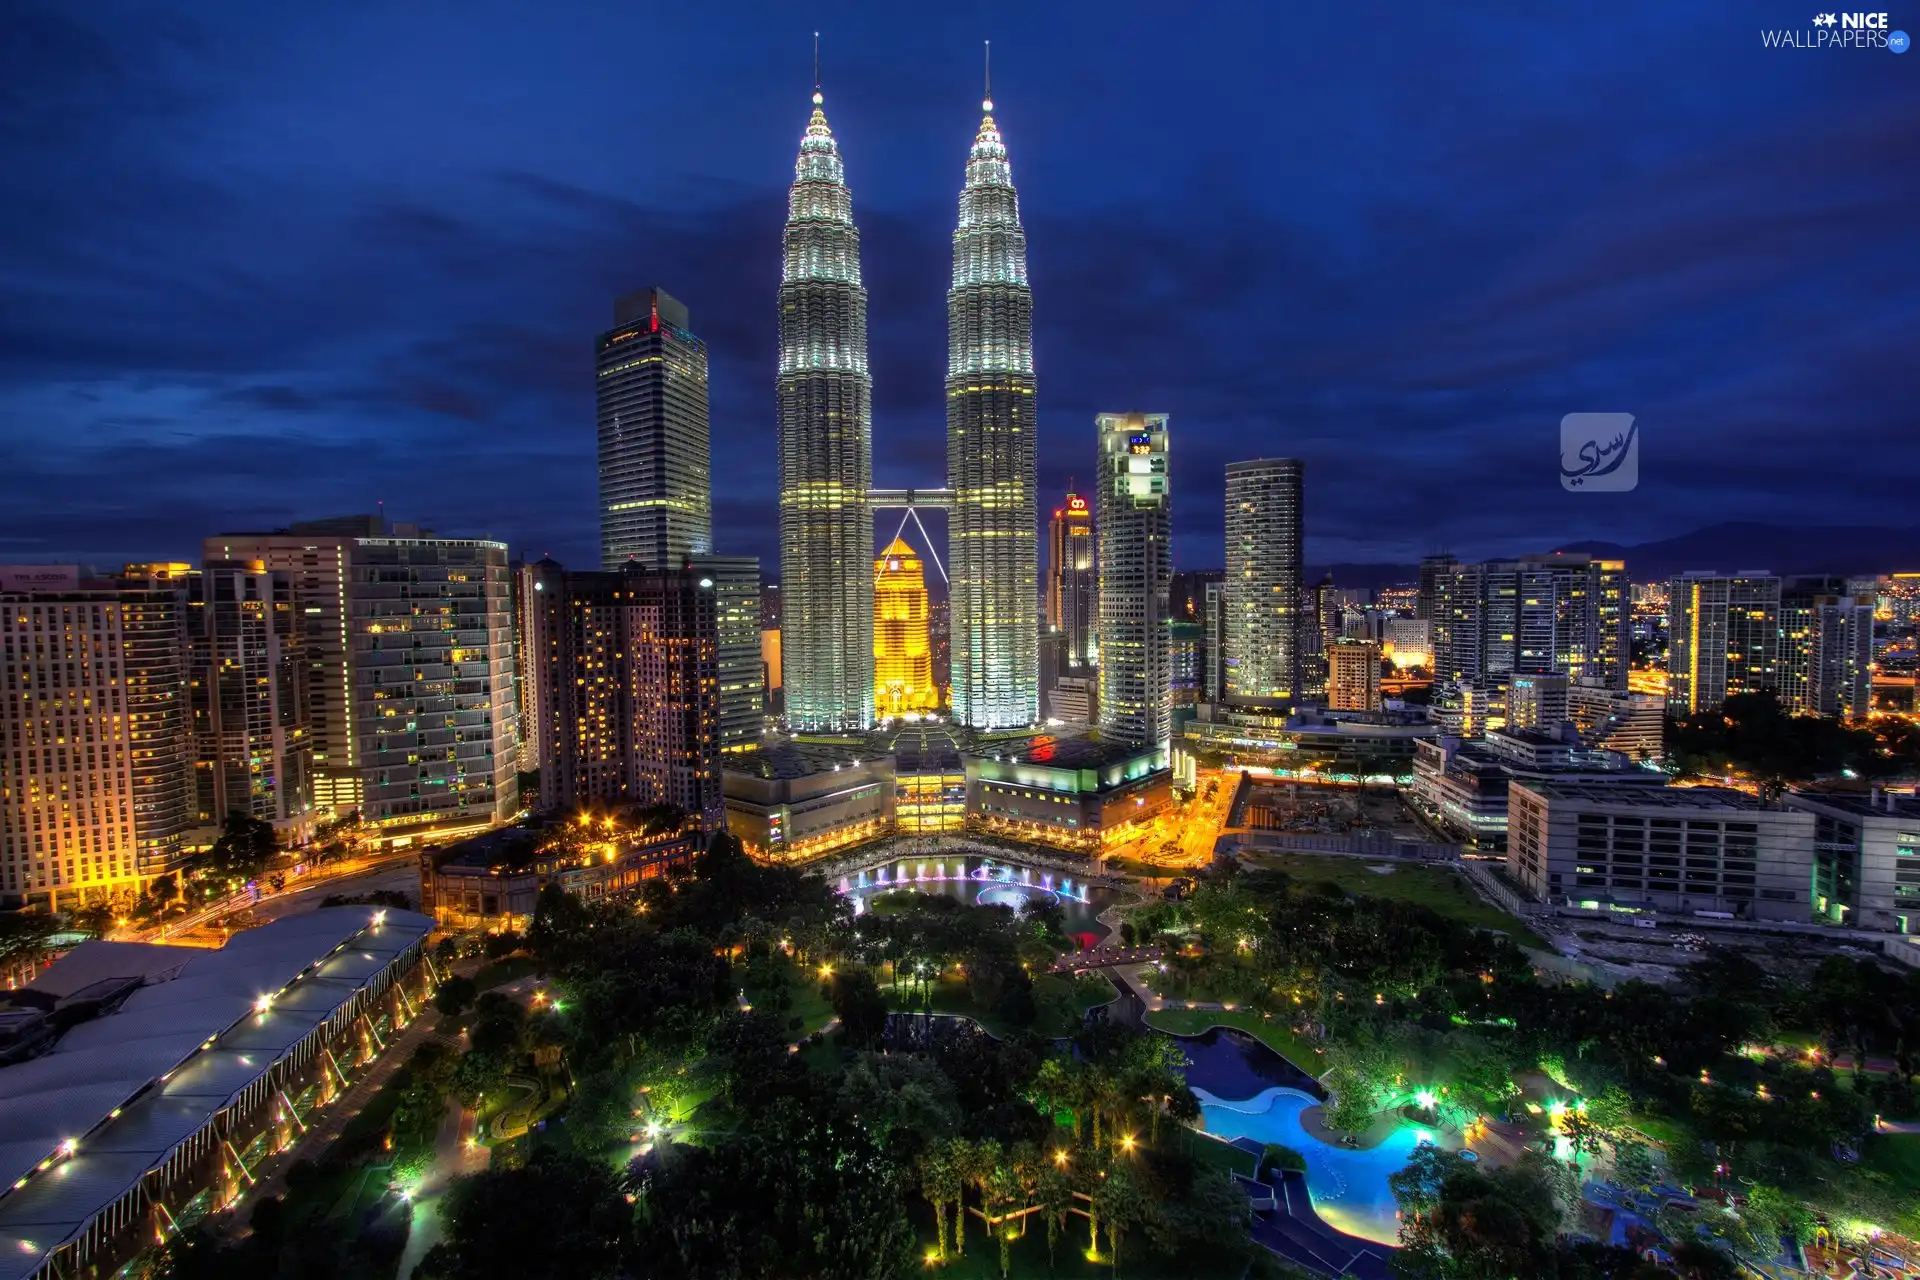 Petronas Towers, Malaysia, Kuala Lumpur